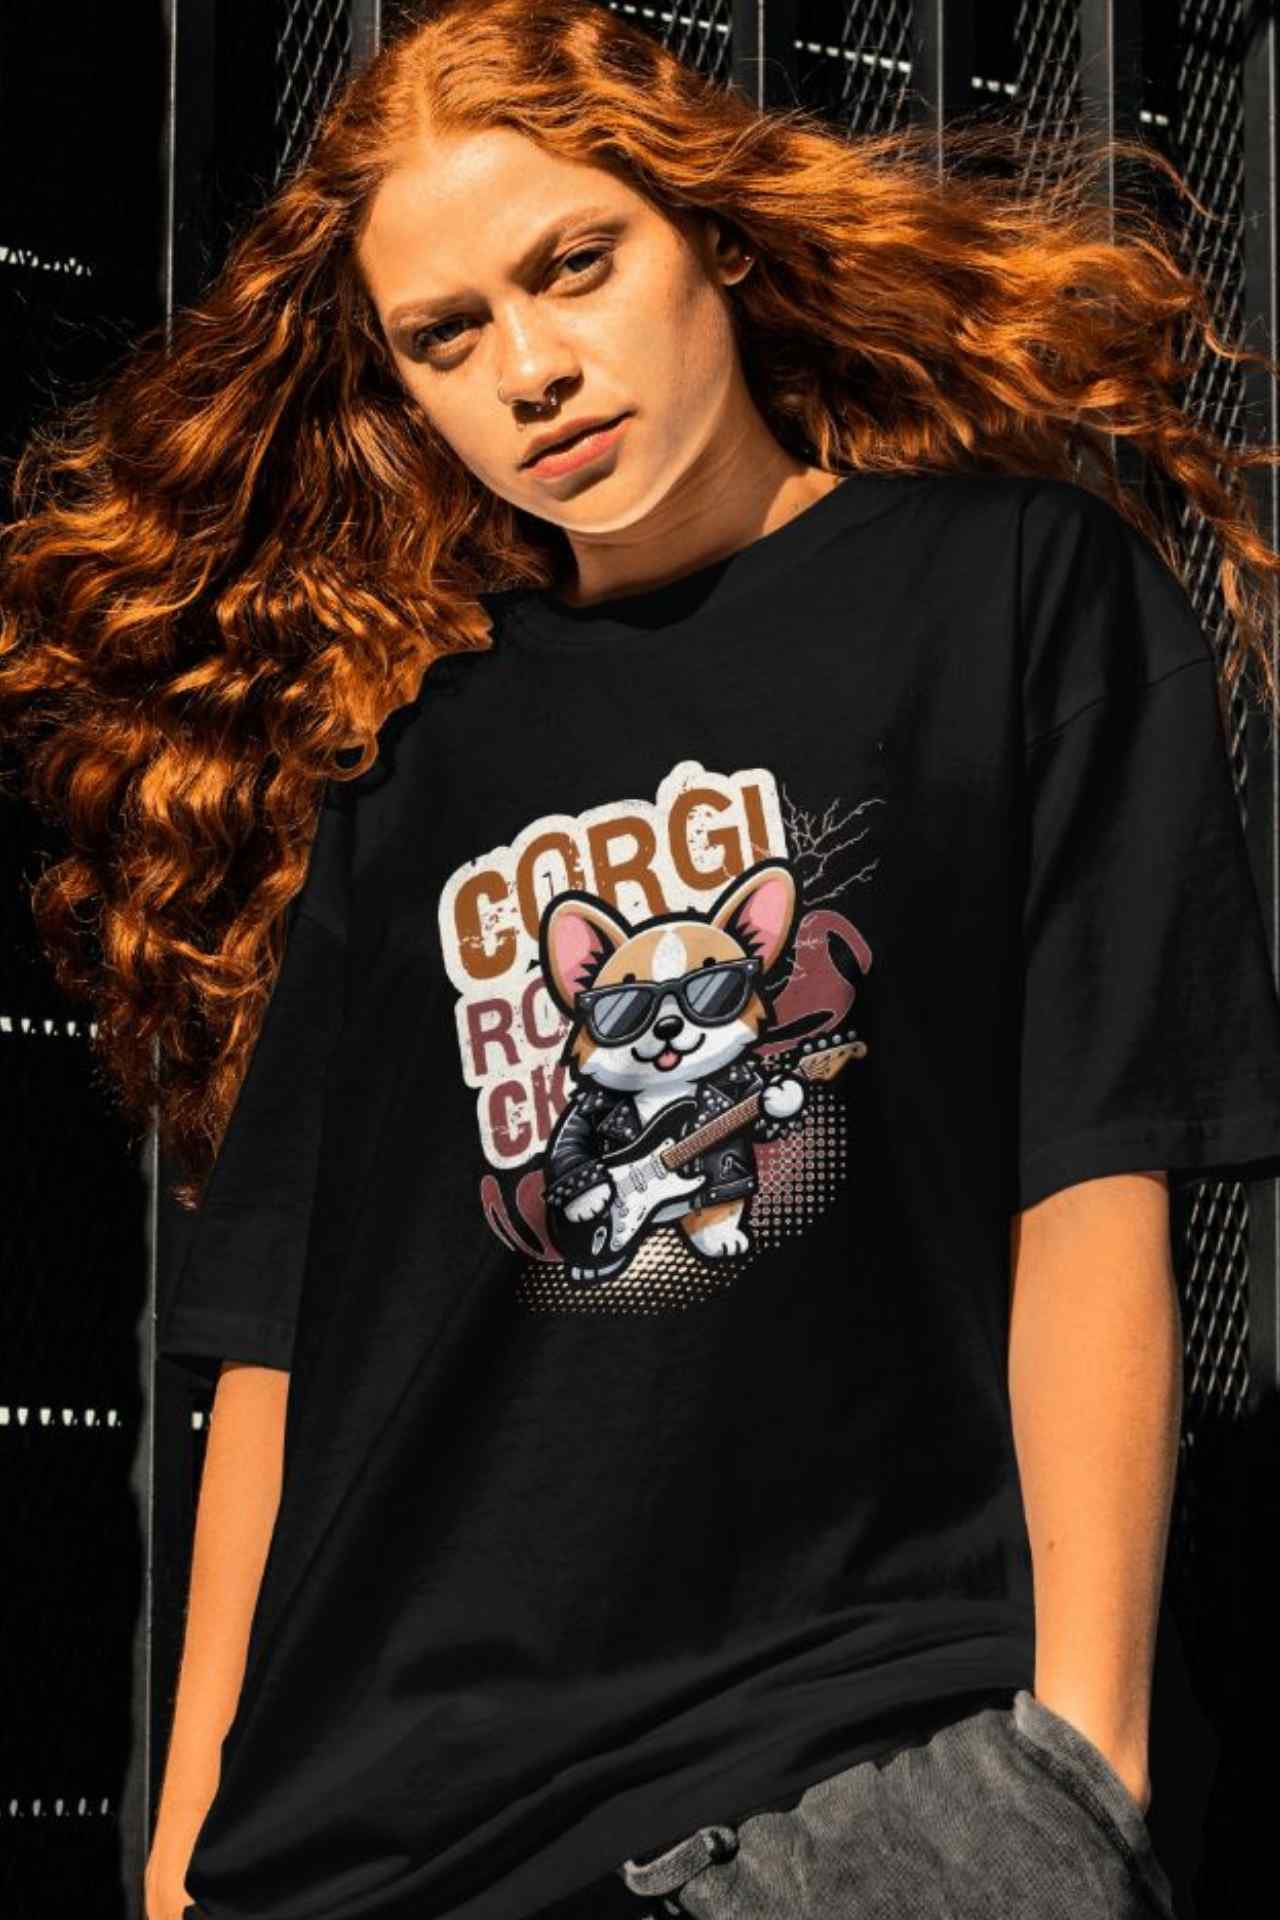 Cool corgi rocker rock and roll shirt